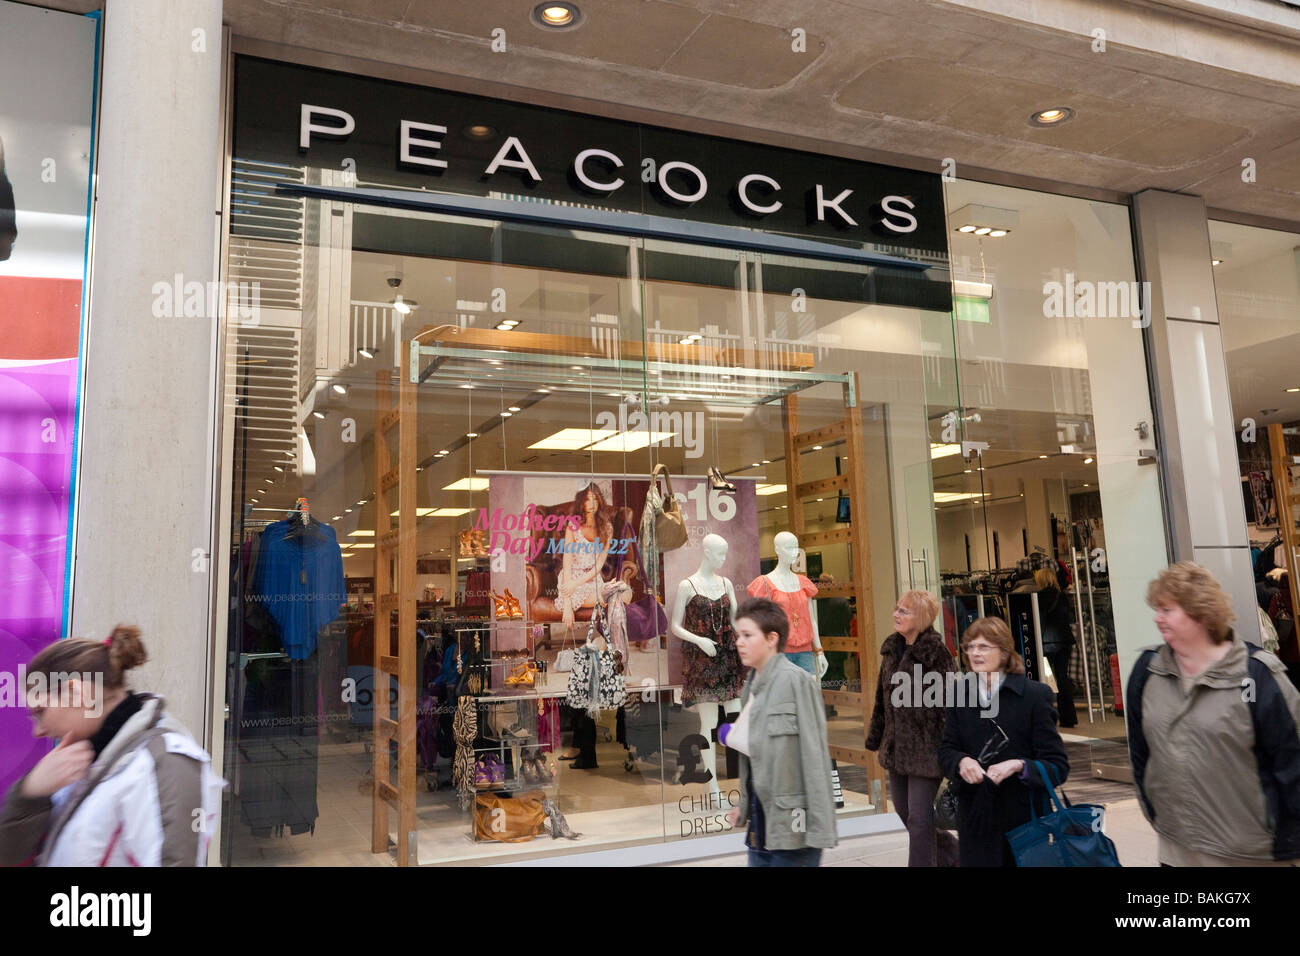 Peacocks shop Stock Photo